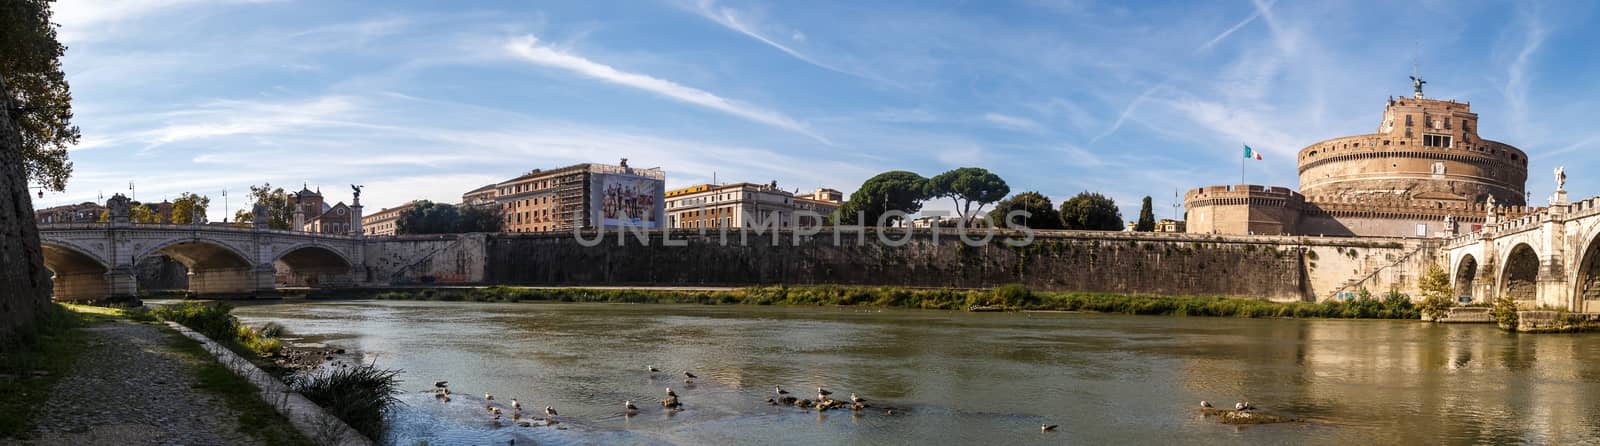 Castel Sant'Agnelo View by niglaynike